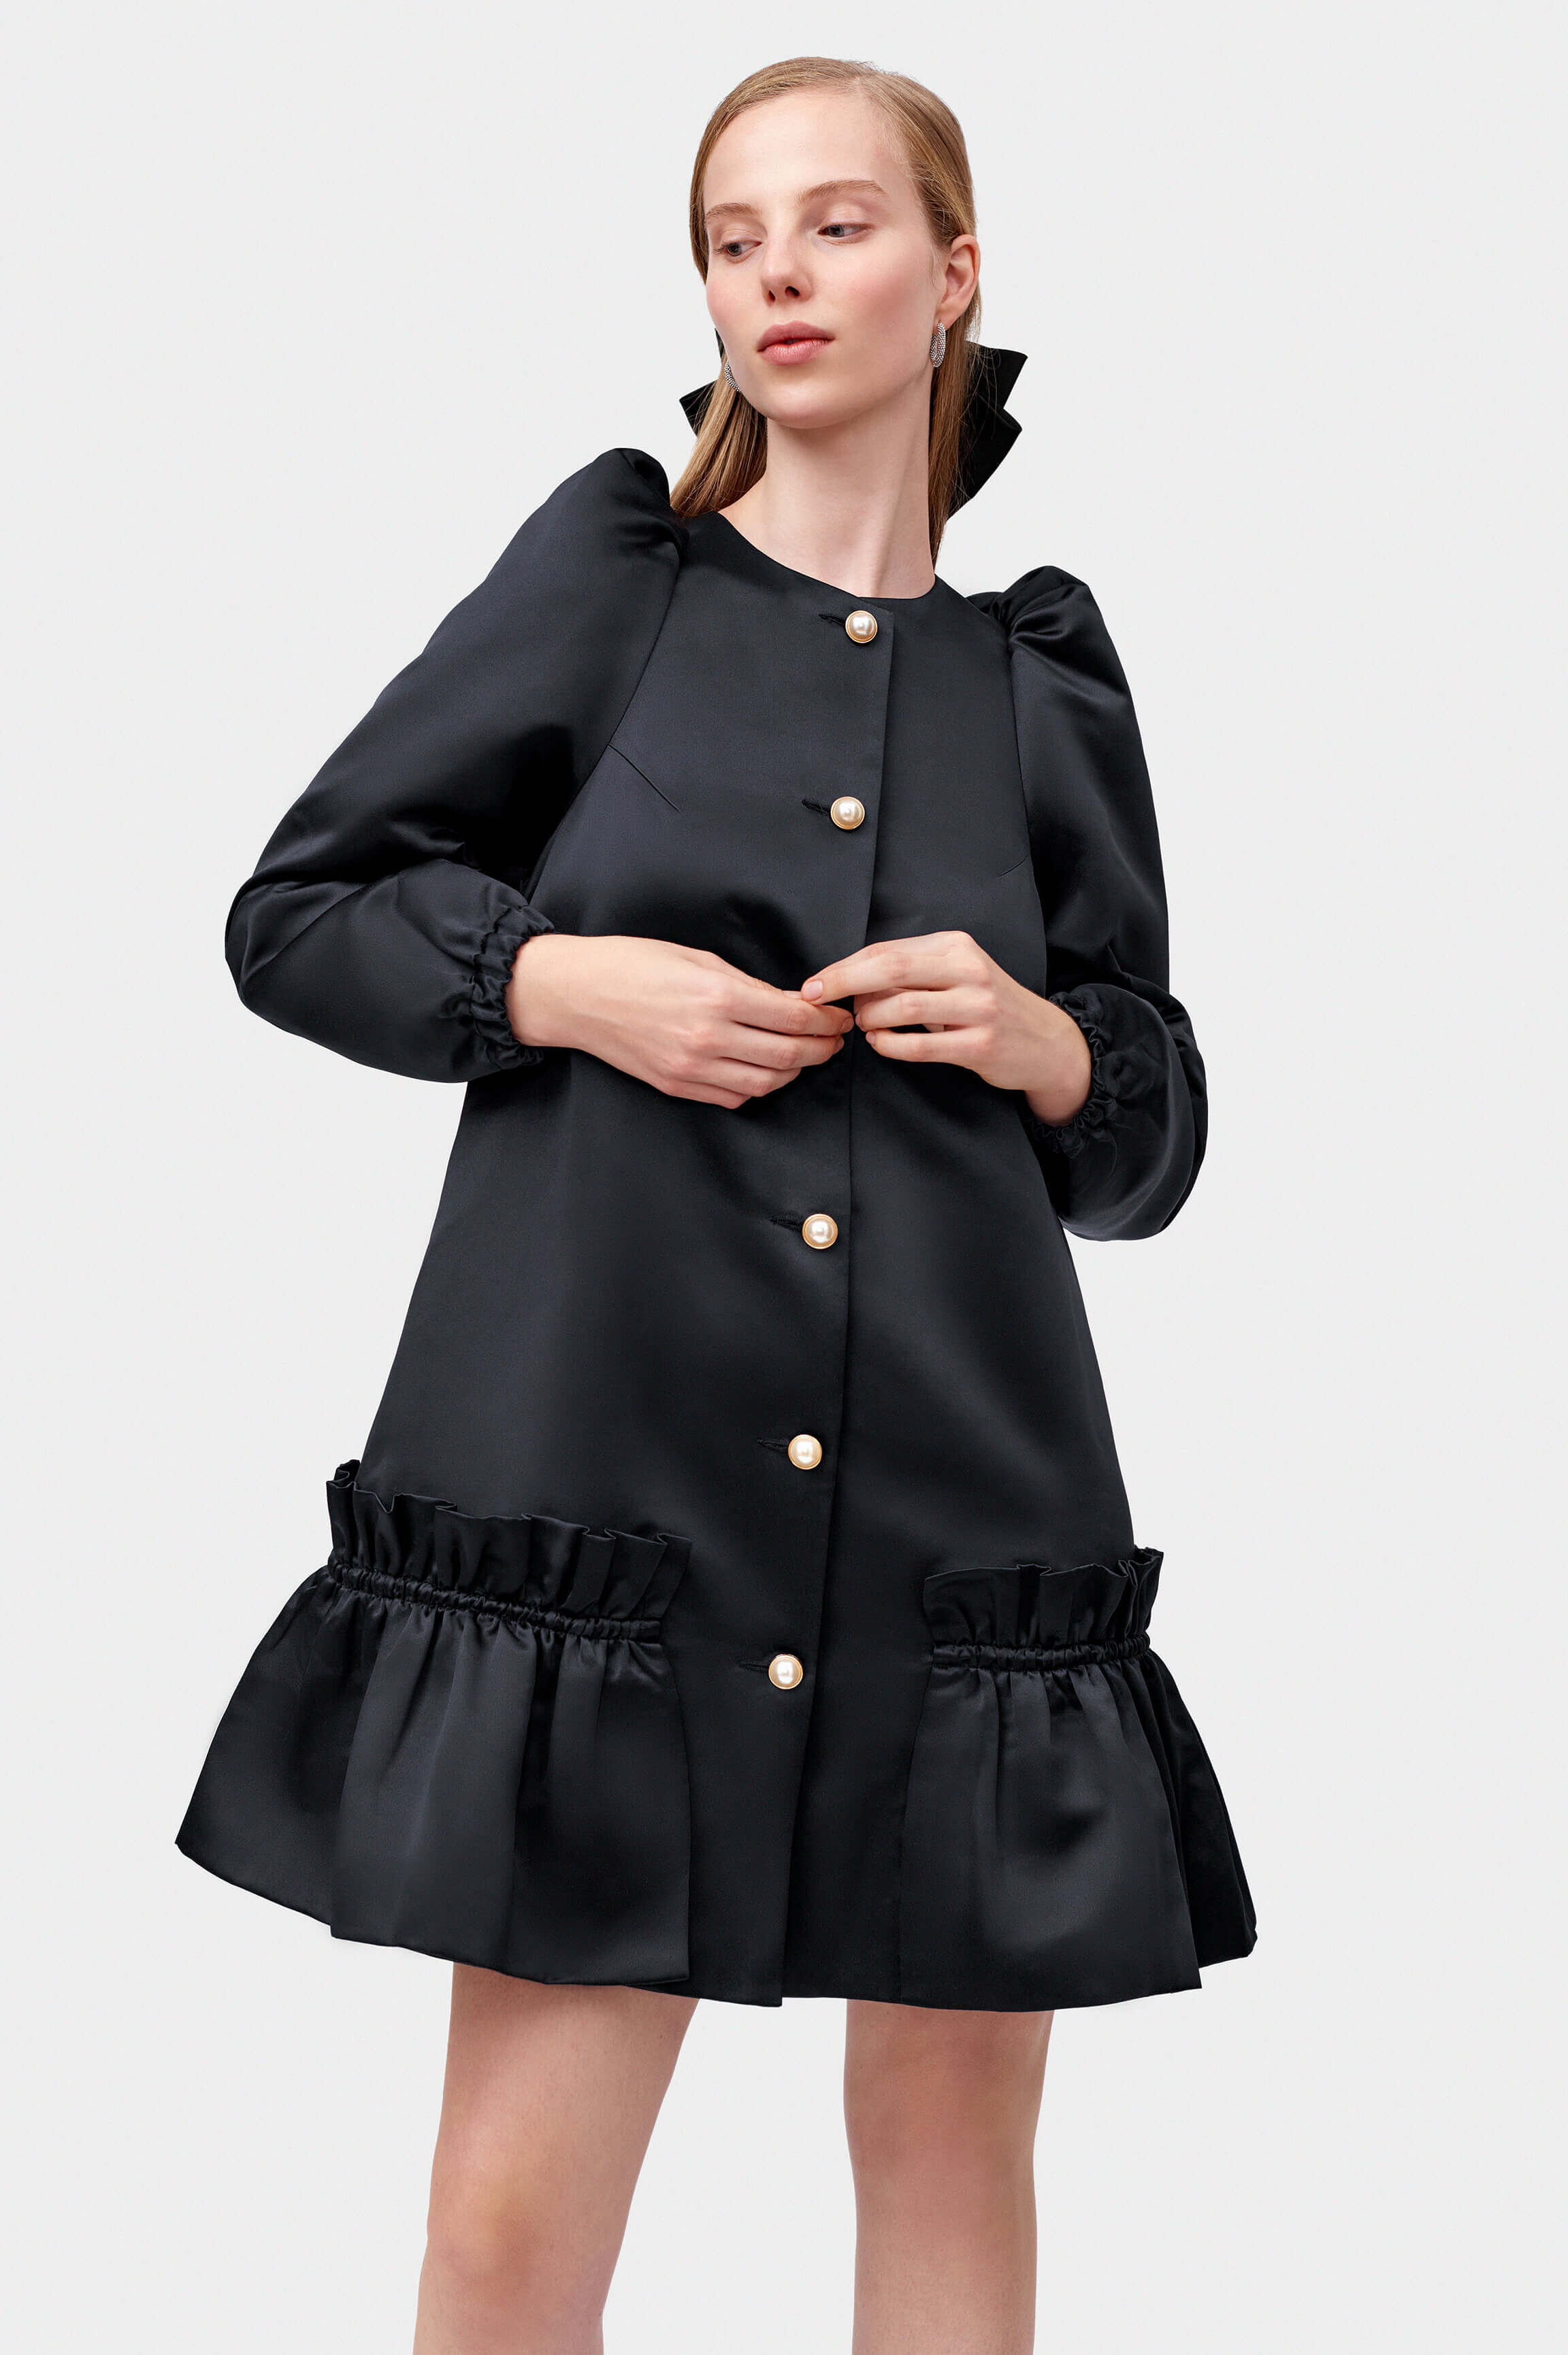 Black puff sleeve dress | Short women's dress in black